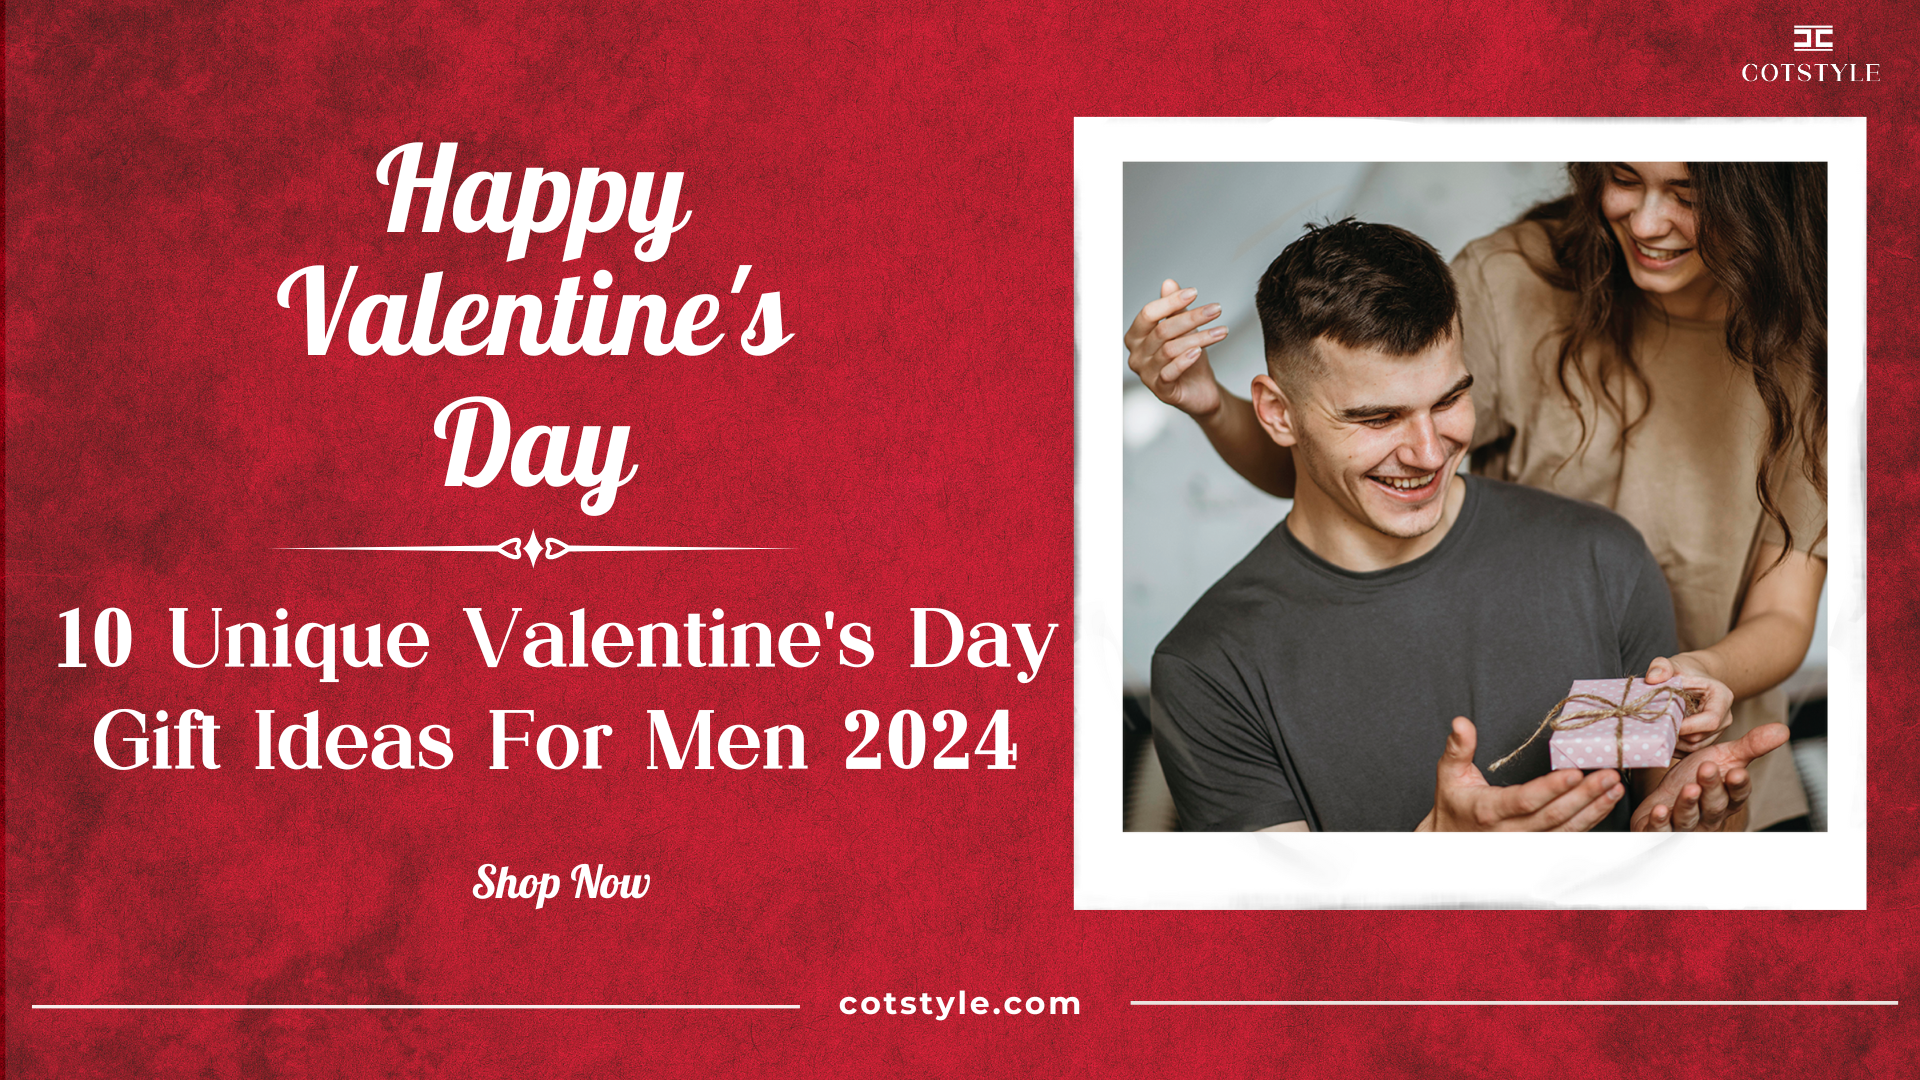 Valentine's Day Gift Ideas For Men 2024